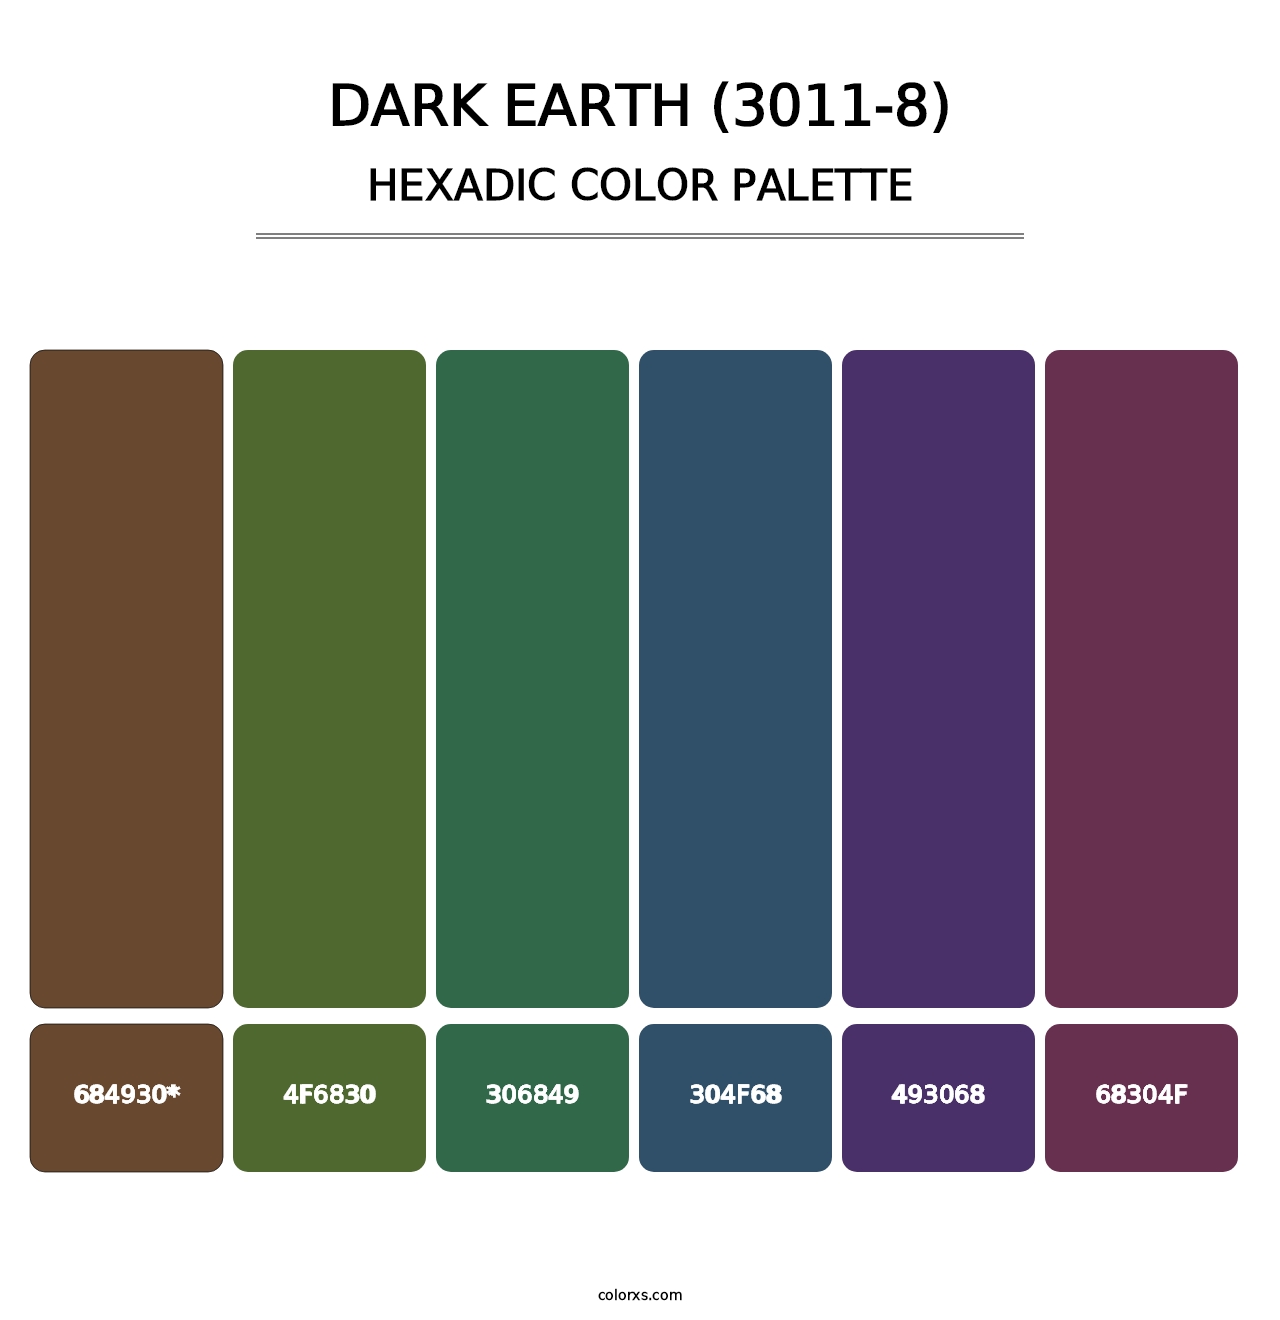 Dark Earth (3011-8) - Hexadic Color Palette